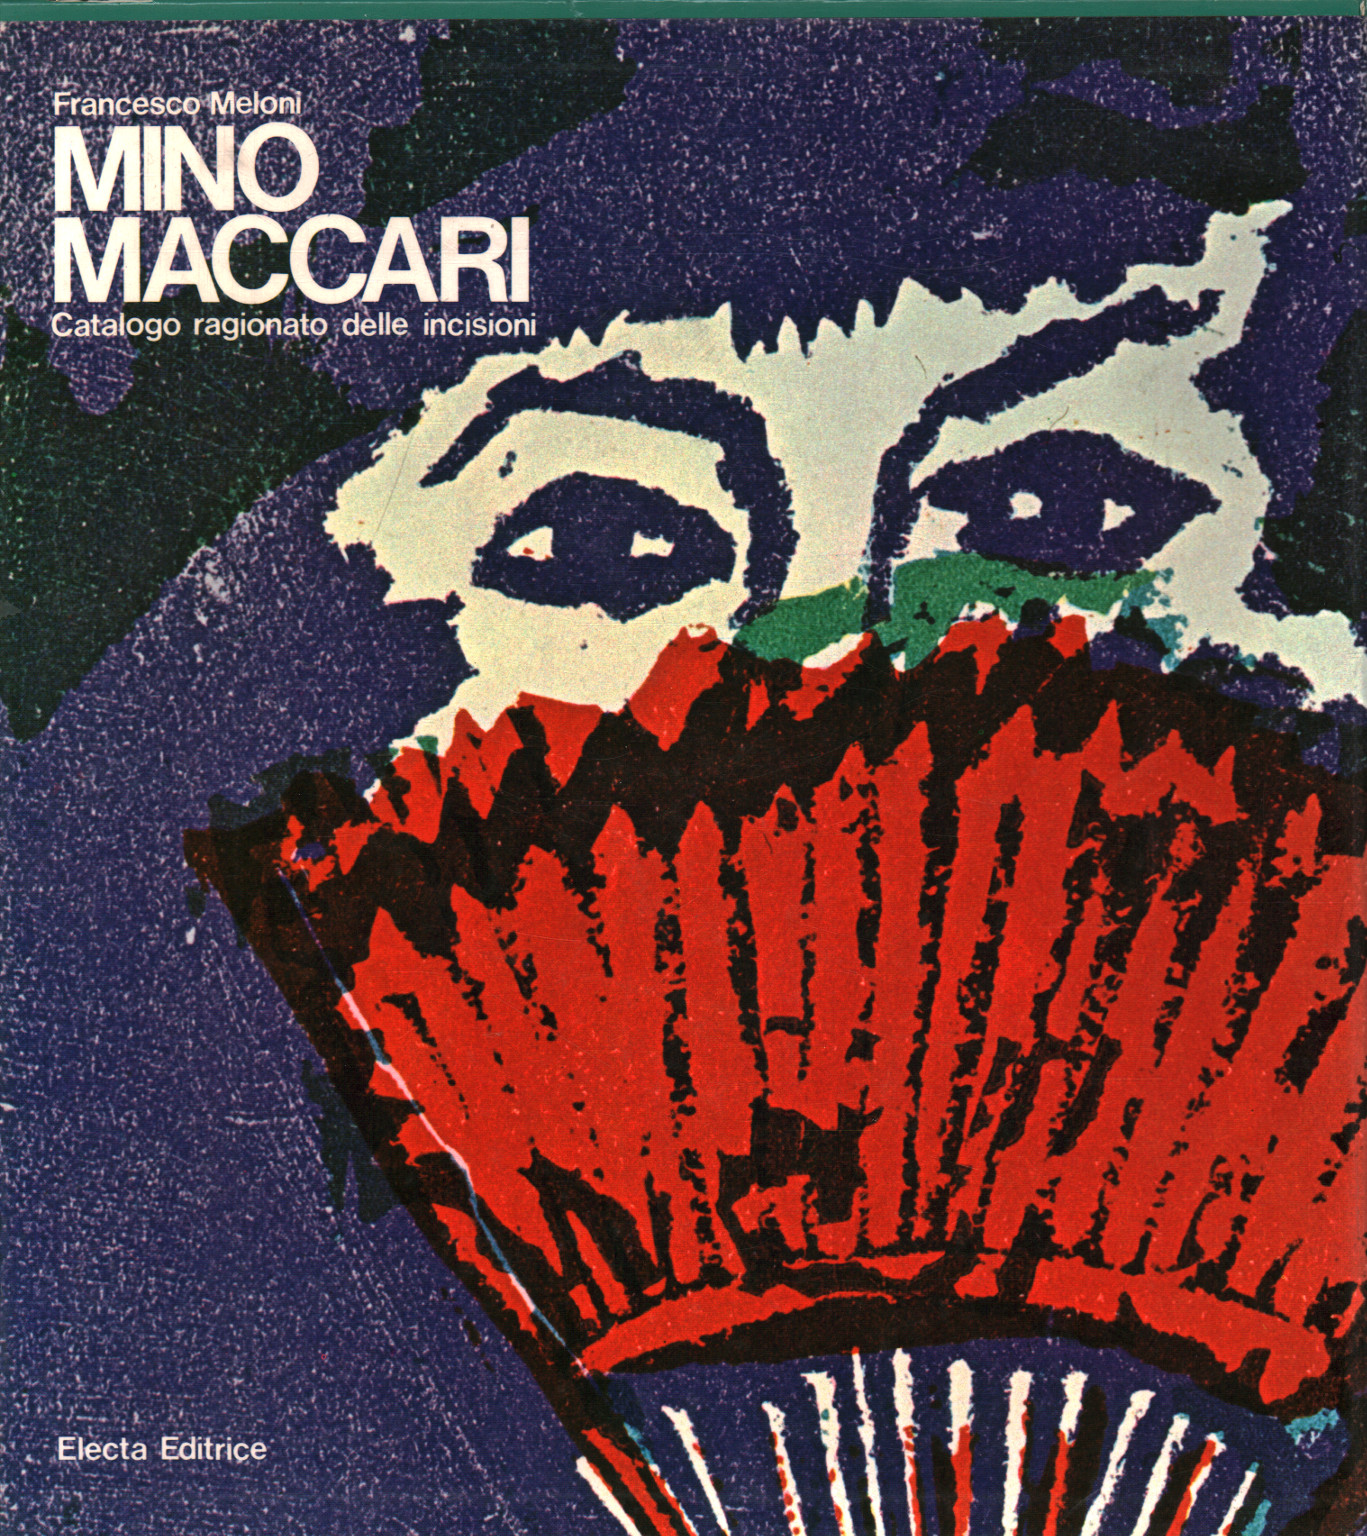 Mino Maccari. Catalog raisonné of i